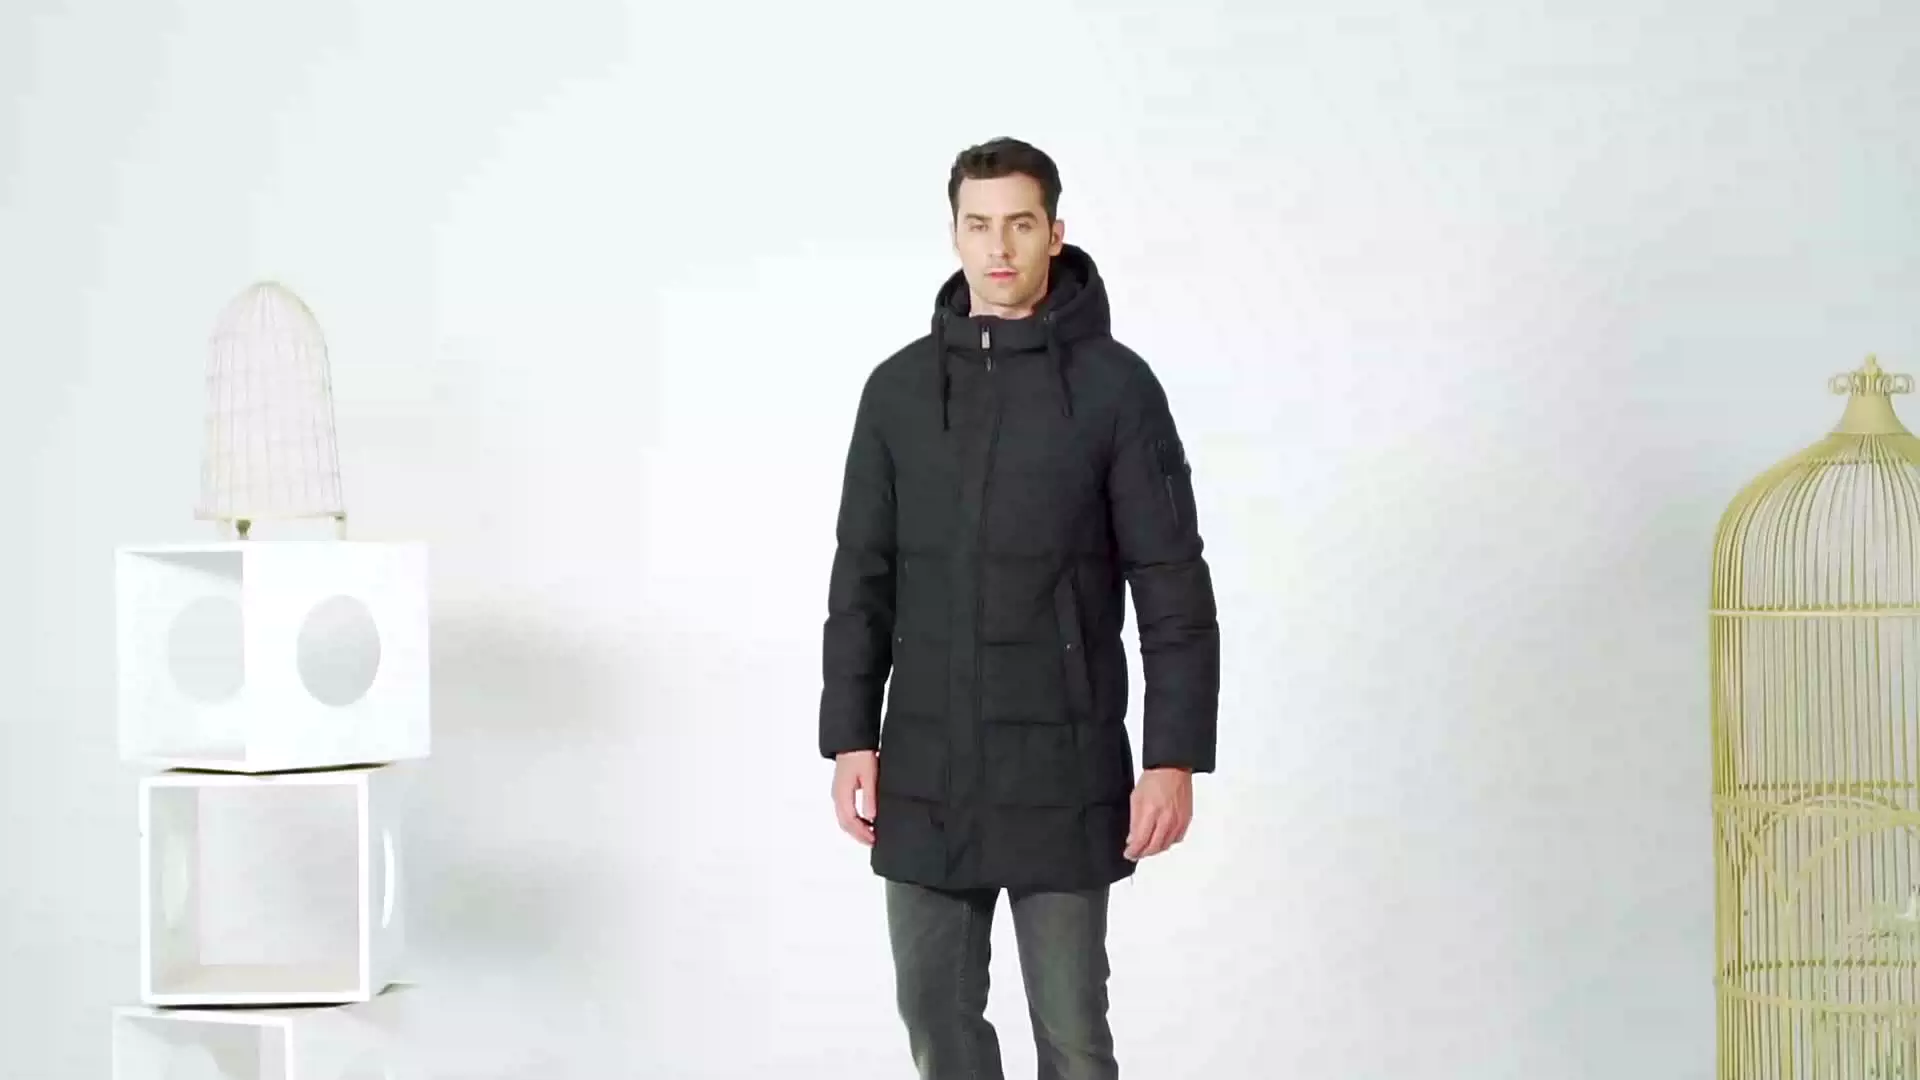 fur parka coat ICEbear 2021 New Winter Men's Jacket High Quality Men's Coat Thick Warm Male Cotton Clothing Brand Man Apparel MWD17933I mens down parka